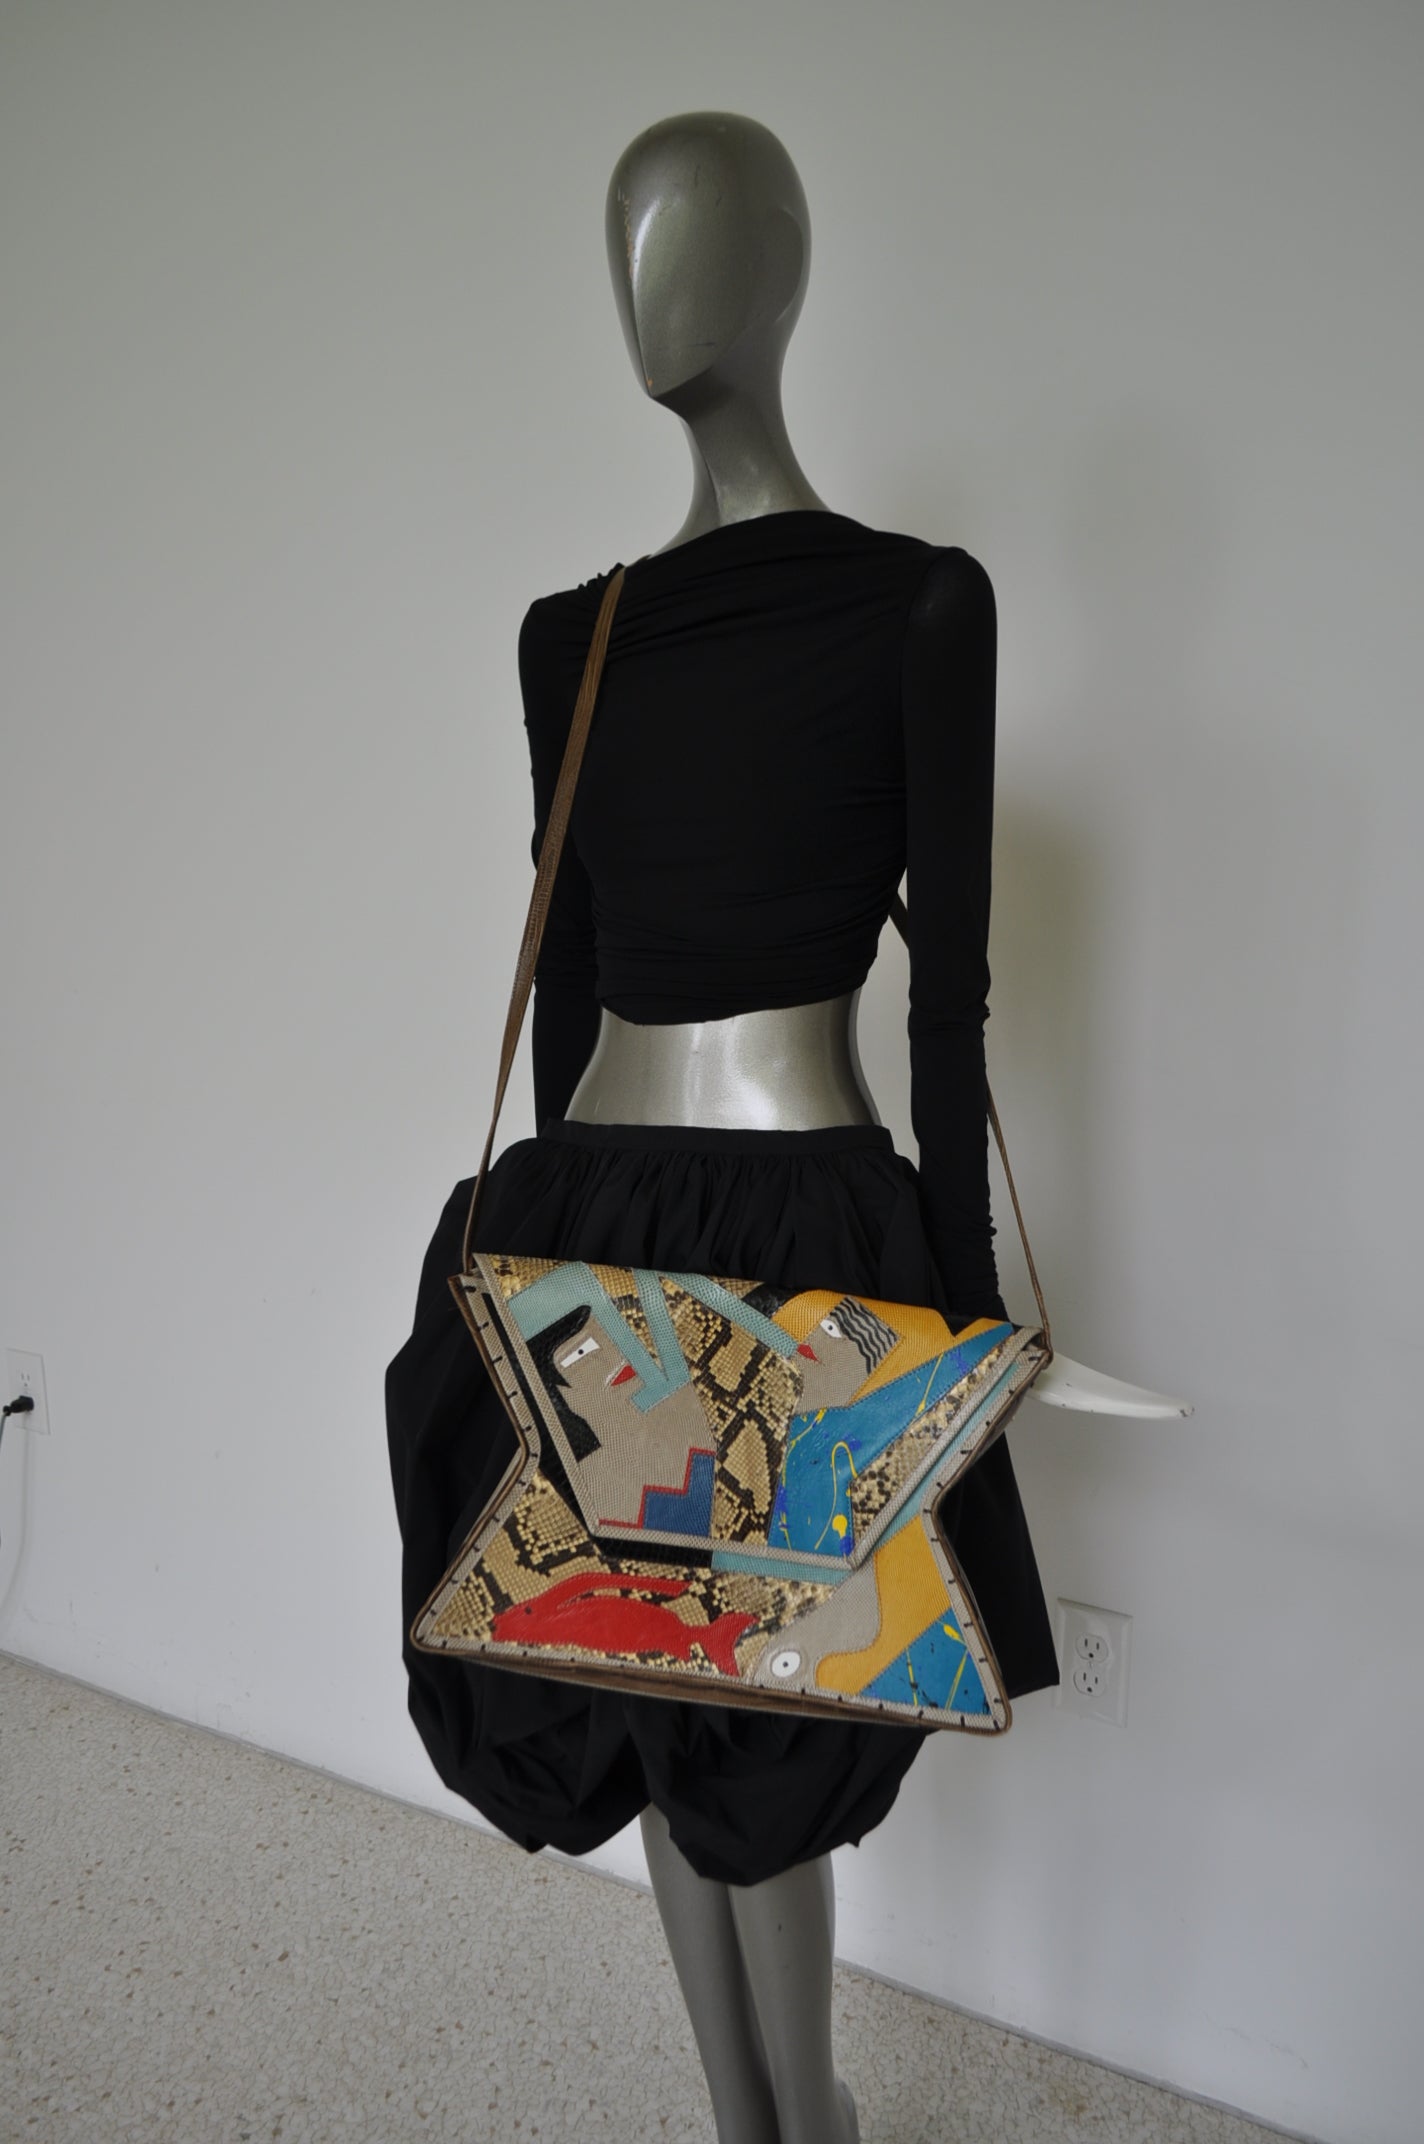 Vintage】Fontana Milano 1915 Olive Green Antique Bag丨Portable - Shop Imogen  Antique Handbags & Totes - Pinkoi